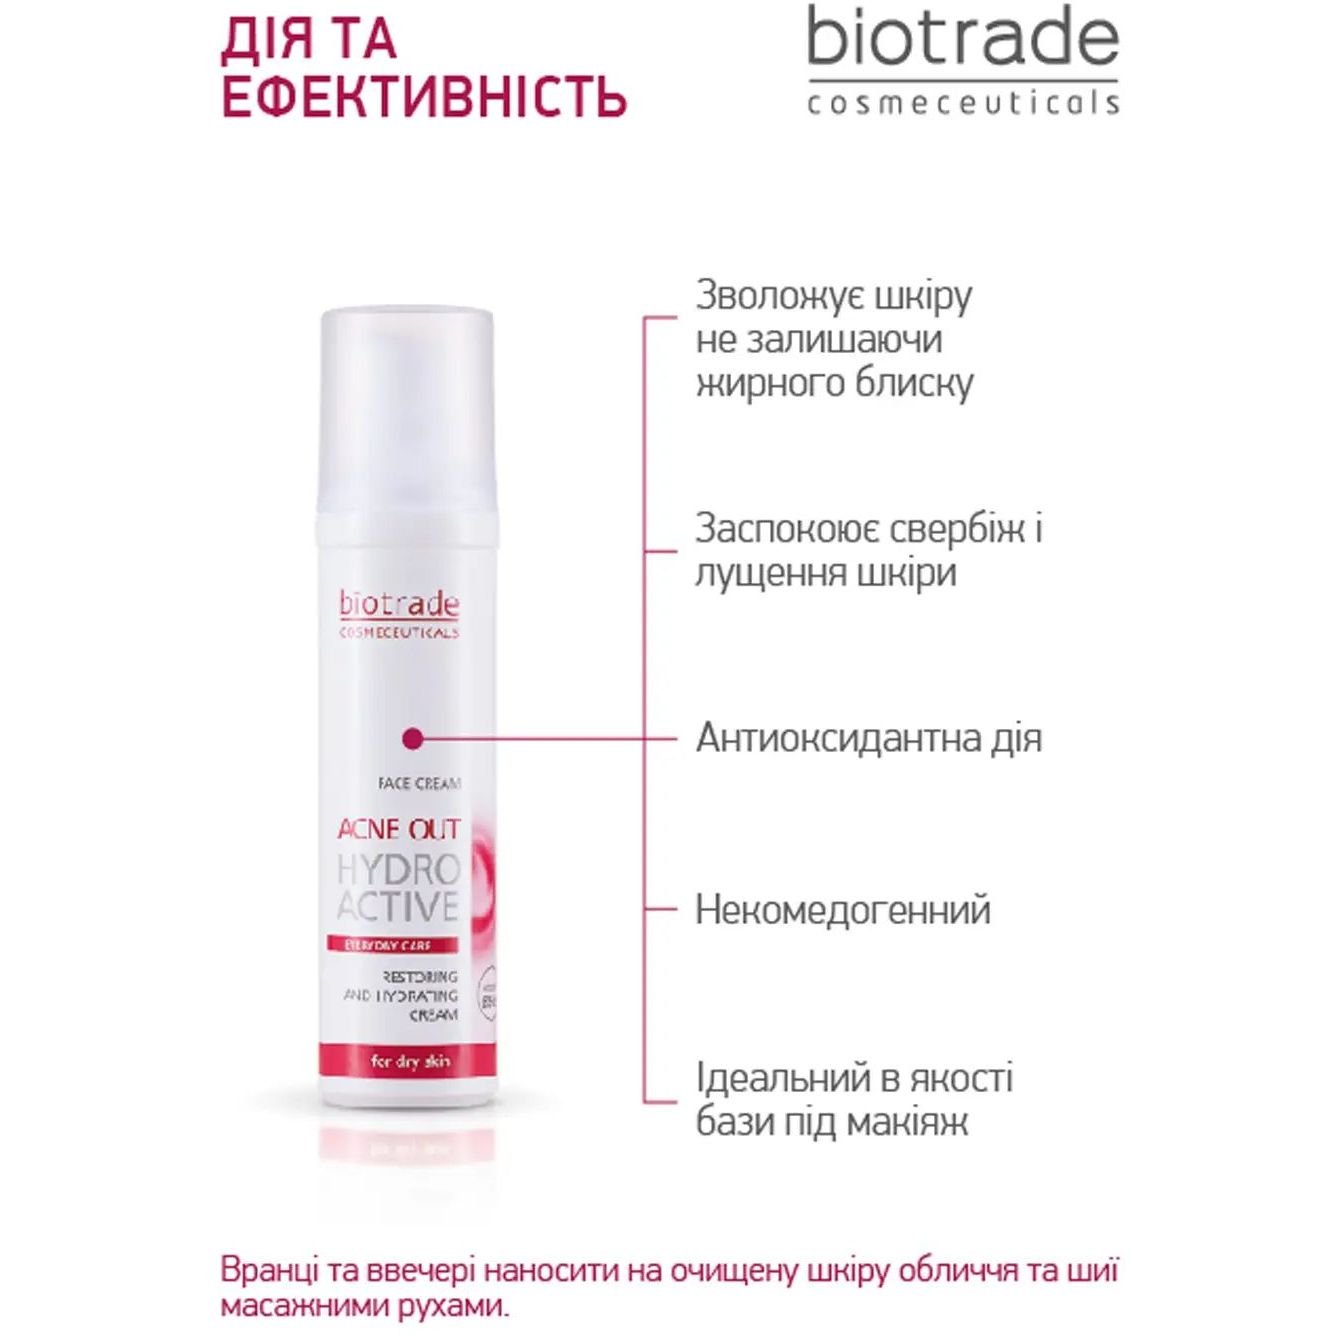 Увлажняющий крем для лица Biotrade Biotrade Acne Out Hydro Active 60 мл (3800221840396) - фото 3